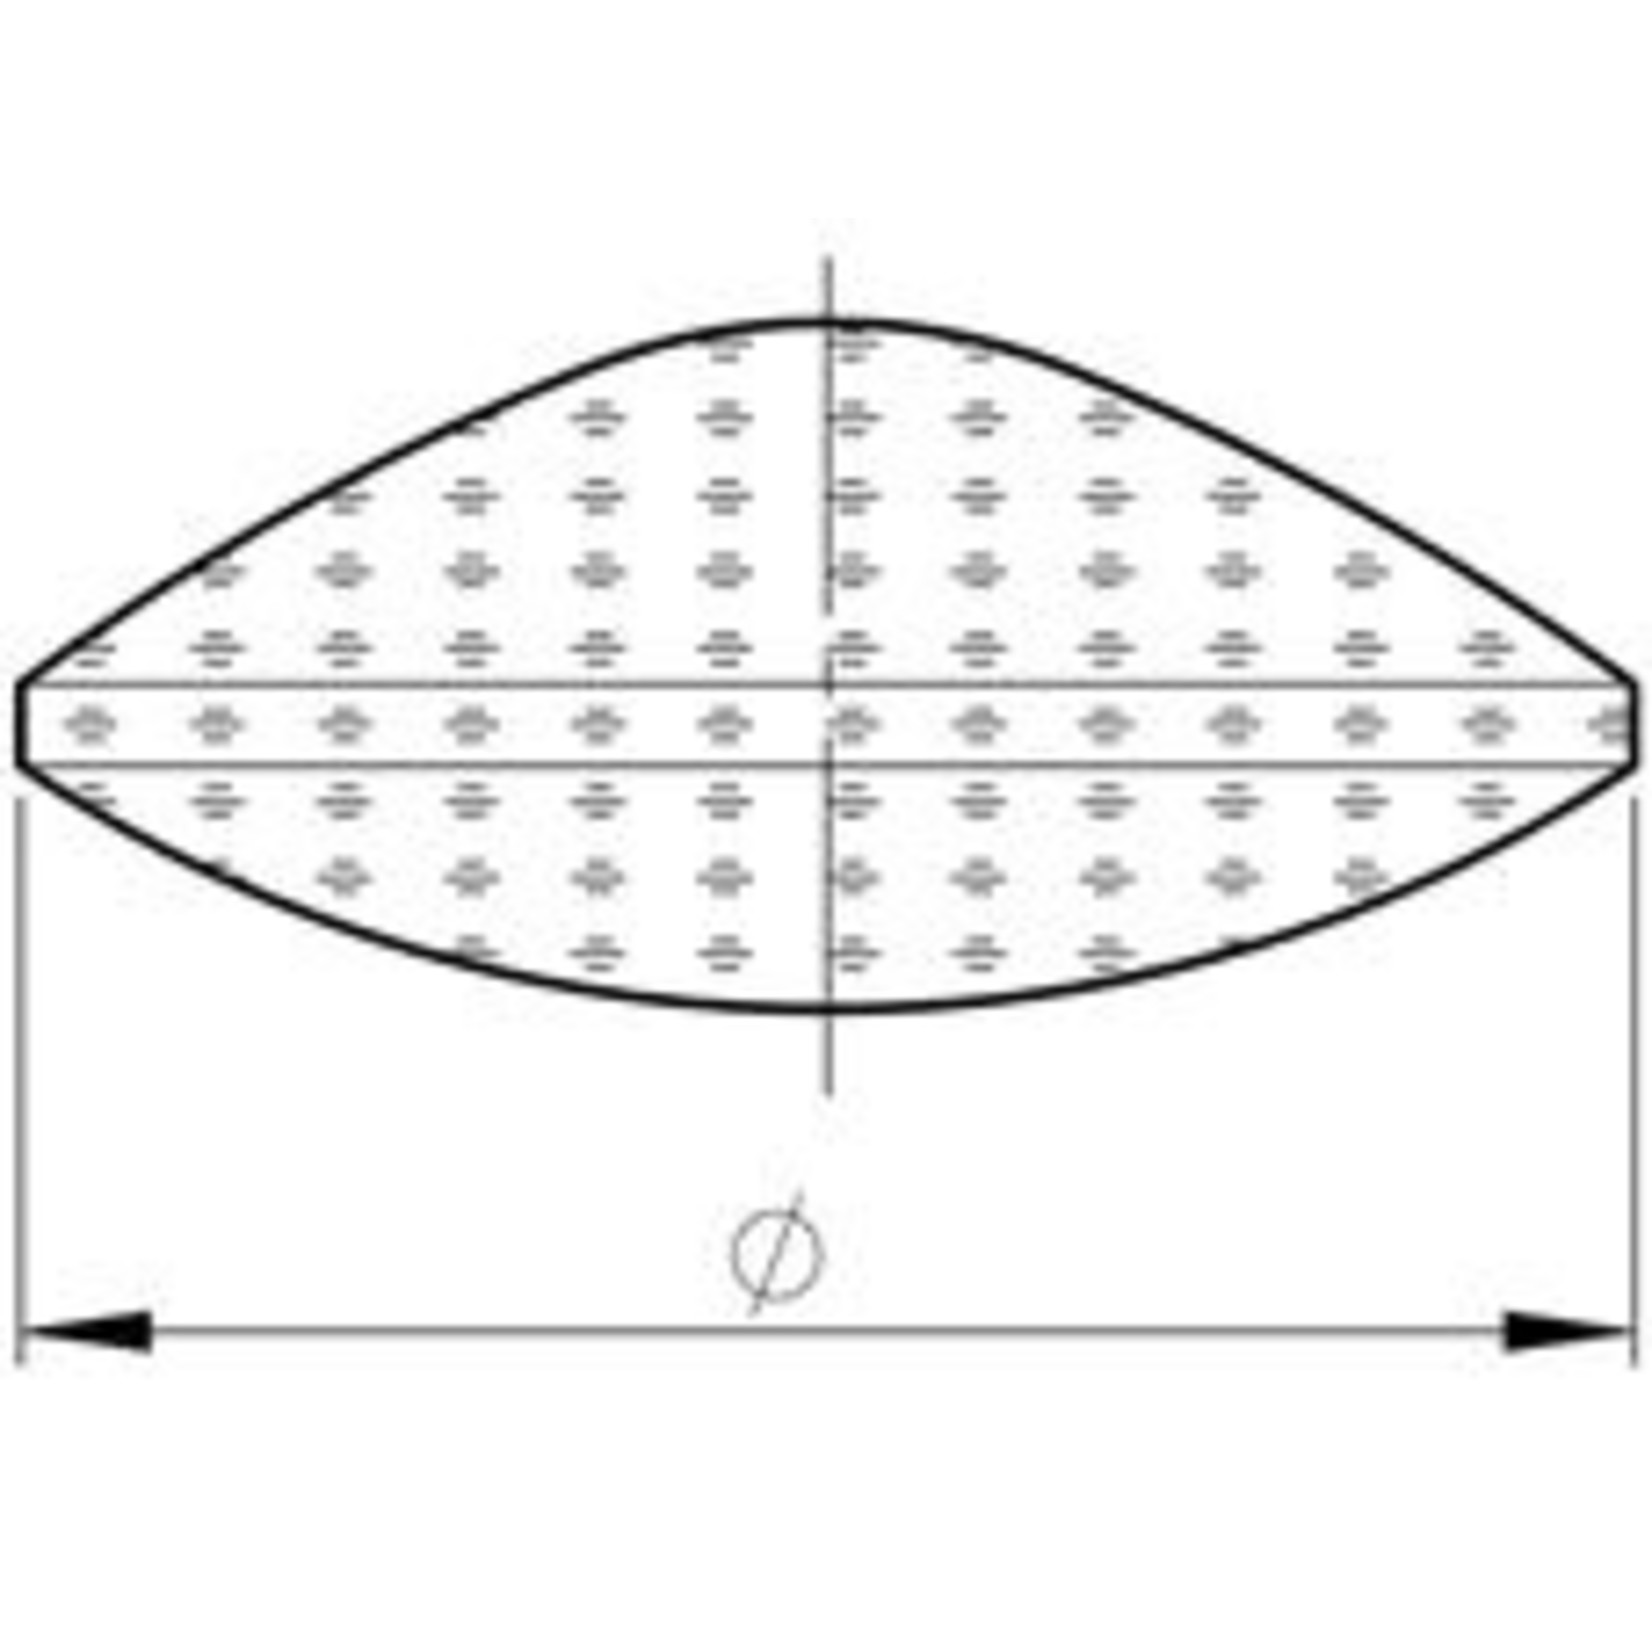 Lente plástica bi-asférica Ø 100 mm - 6 dioptrias